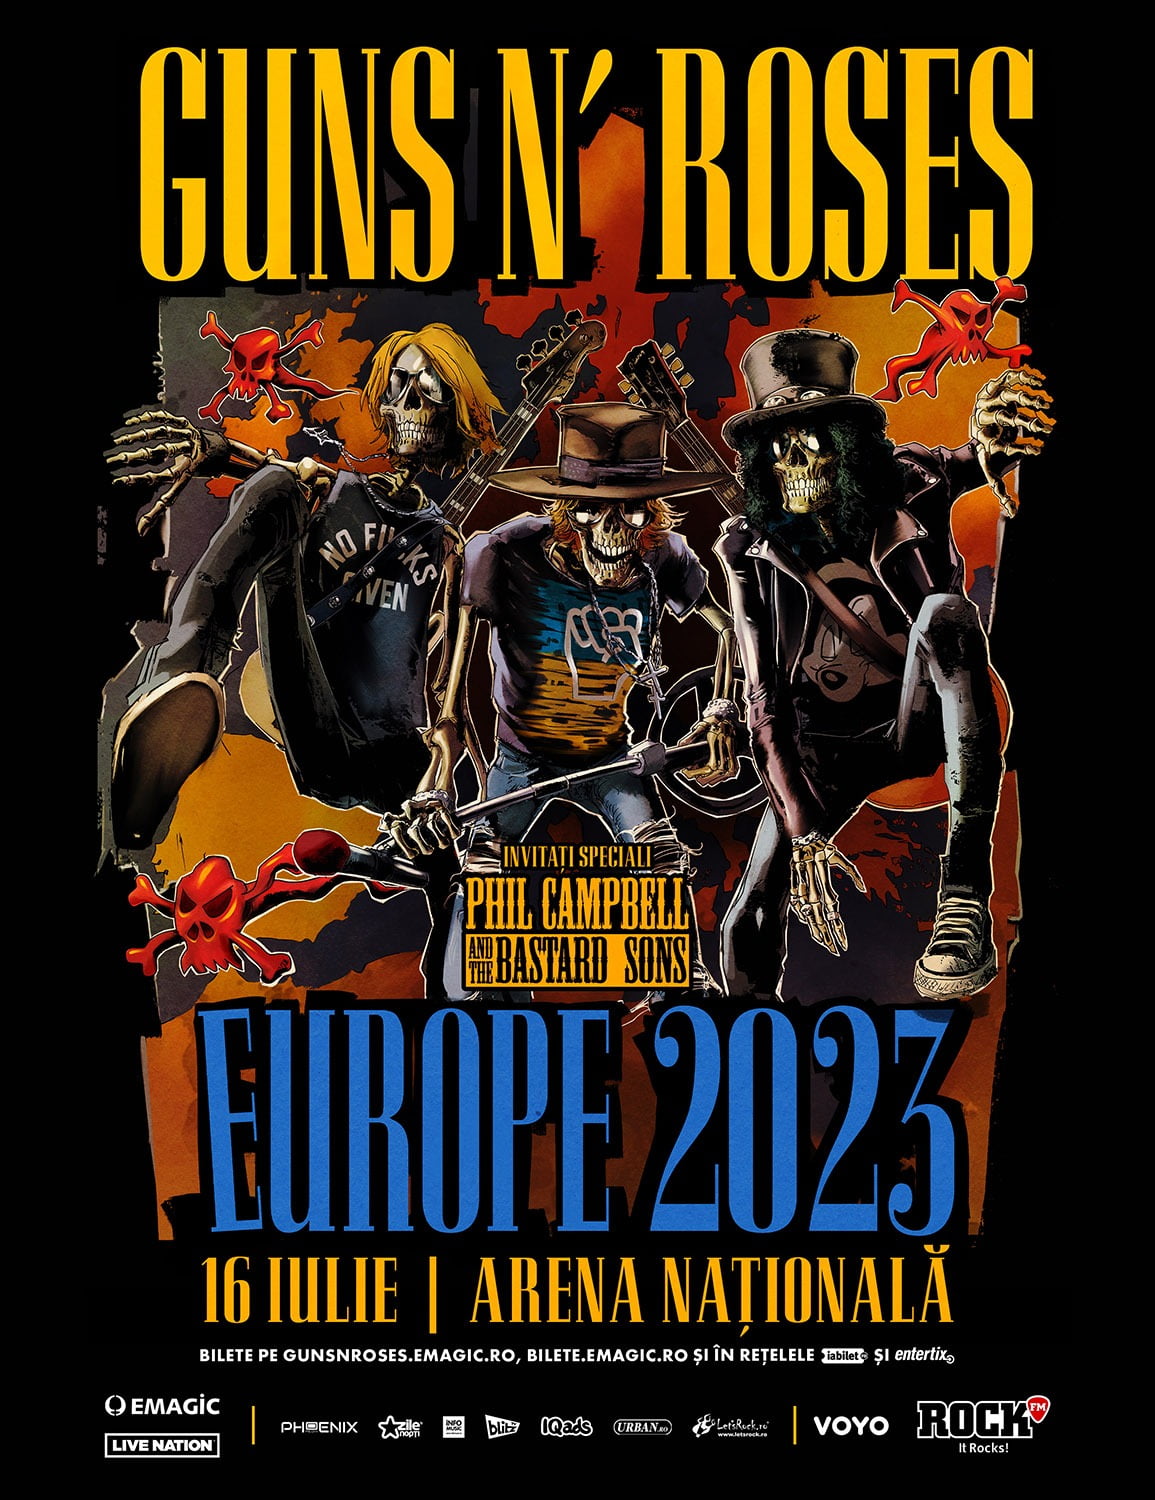 Phil Campbell and the Bastard Sons deschid concertul GUNS N’ ROSES de la București